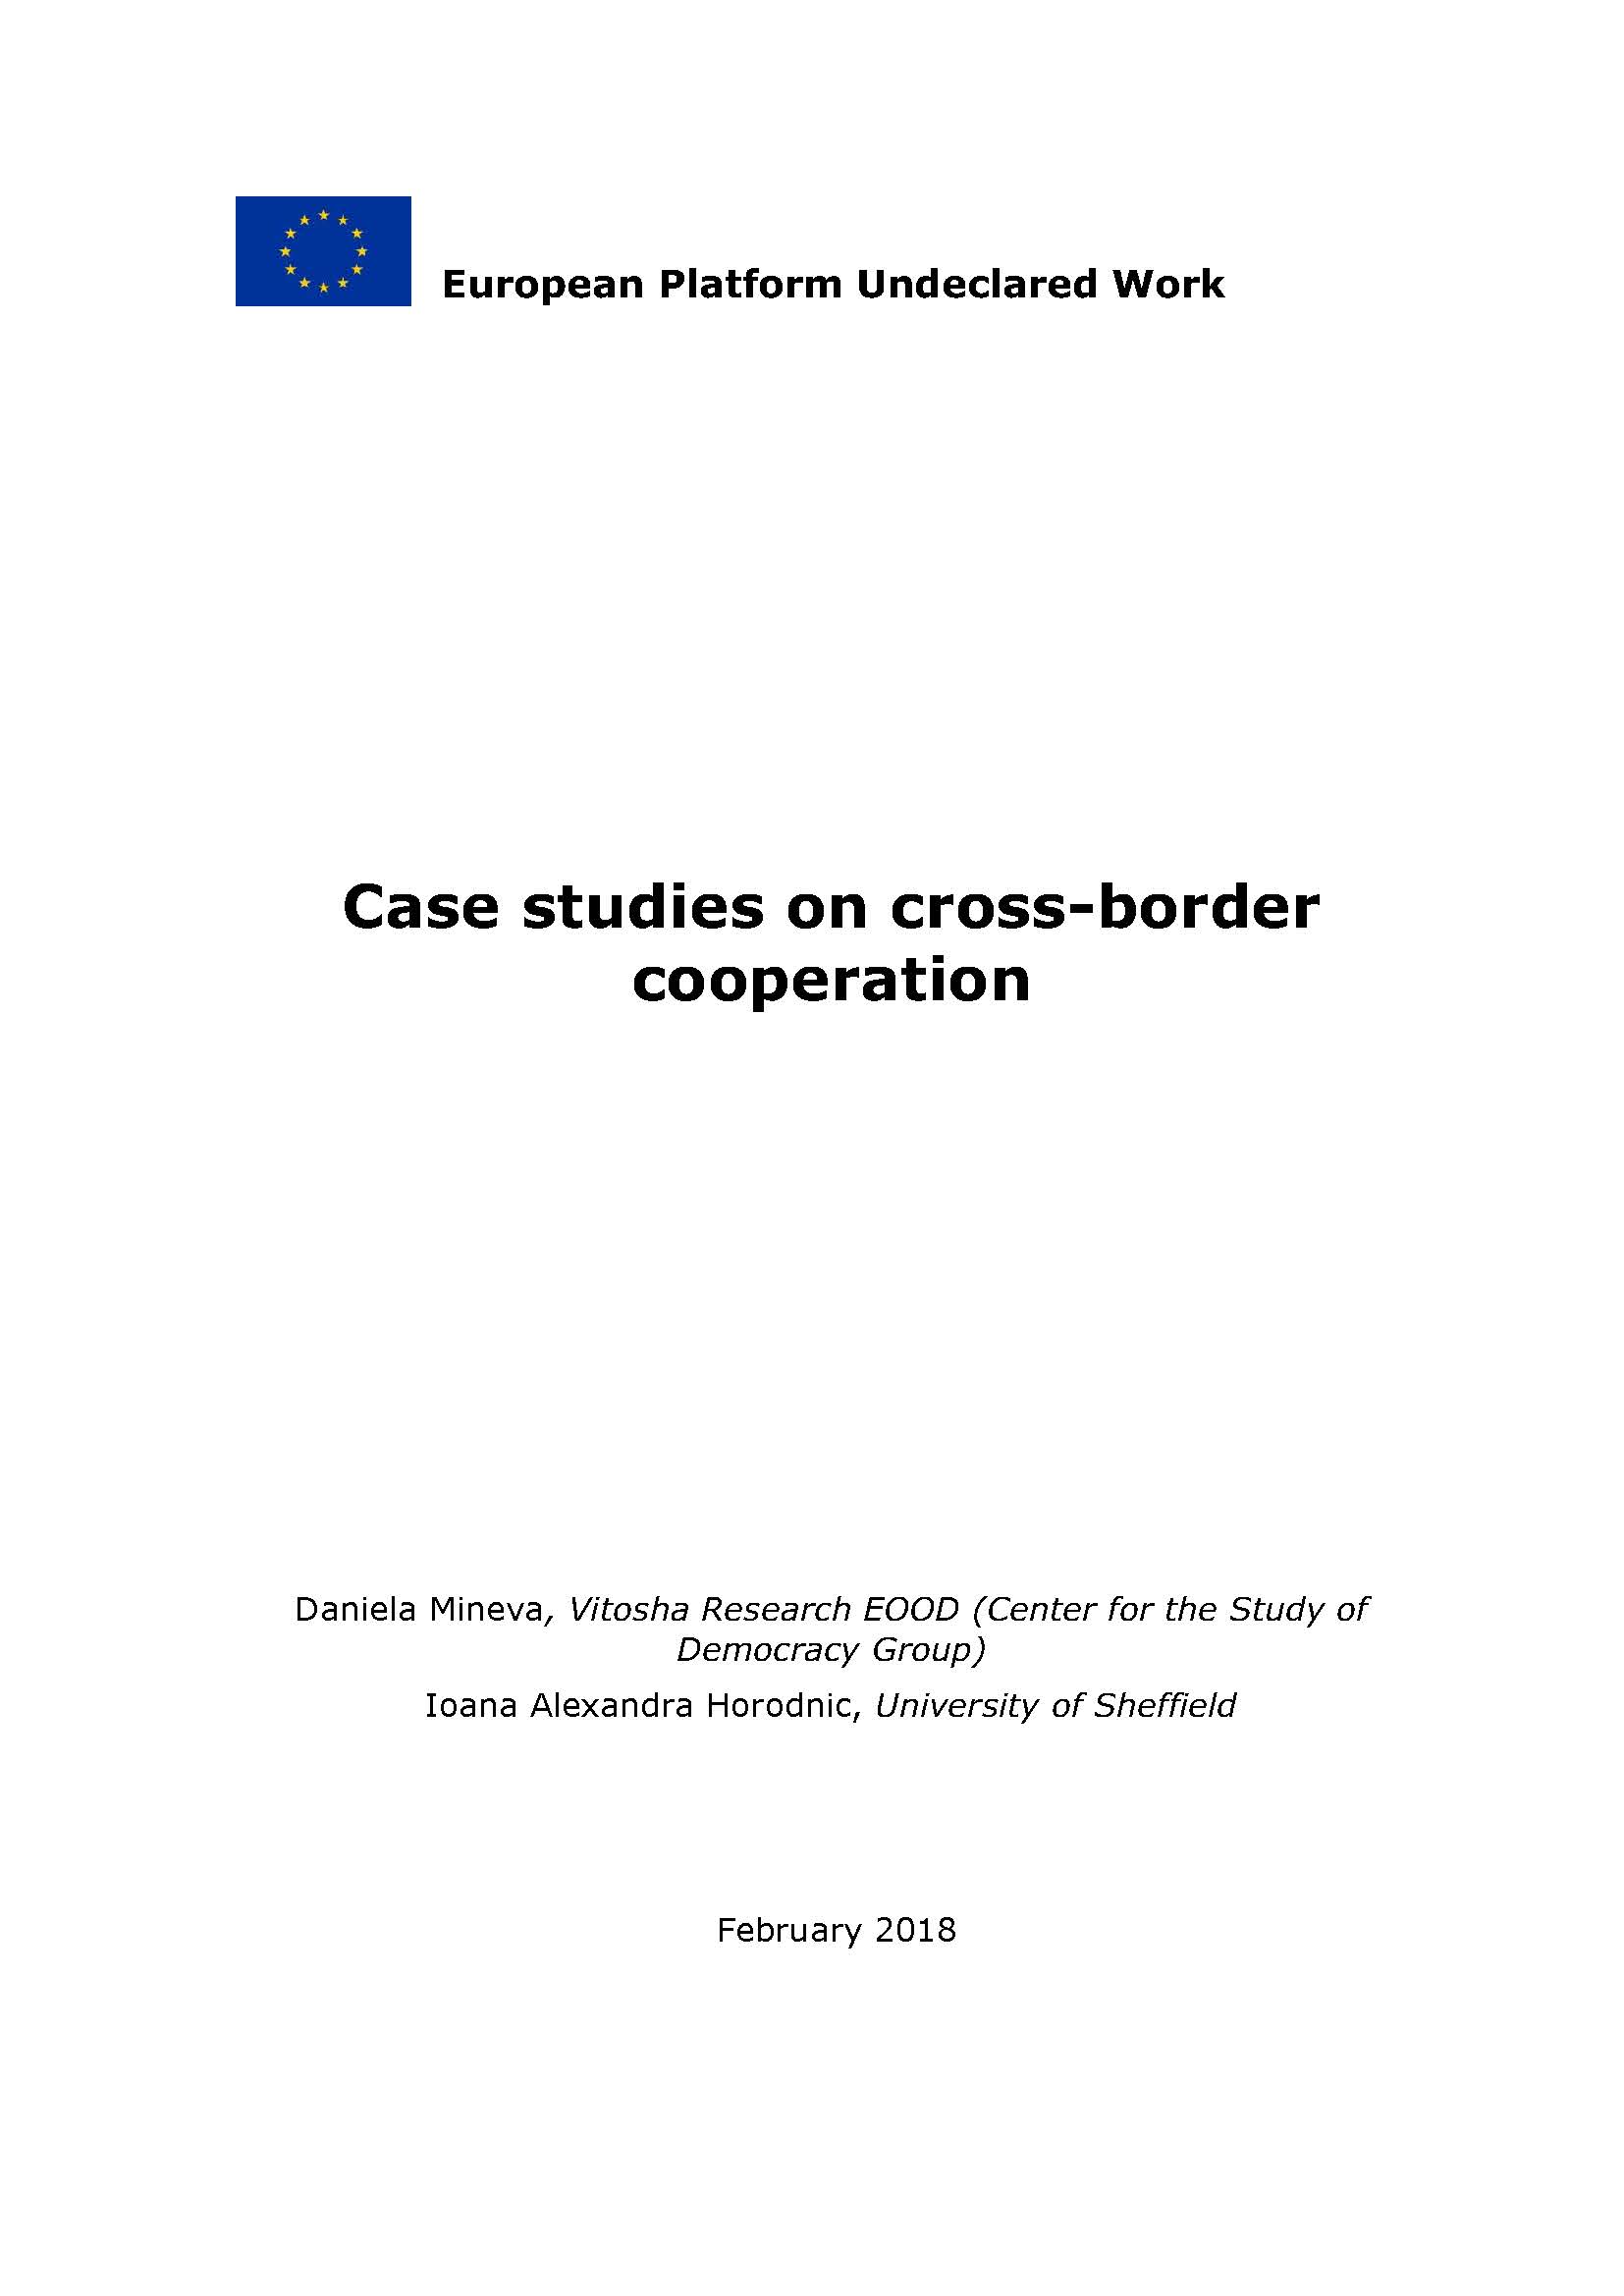 Case studies on cross-border cooperation